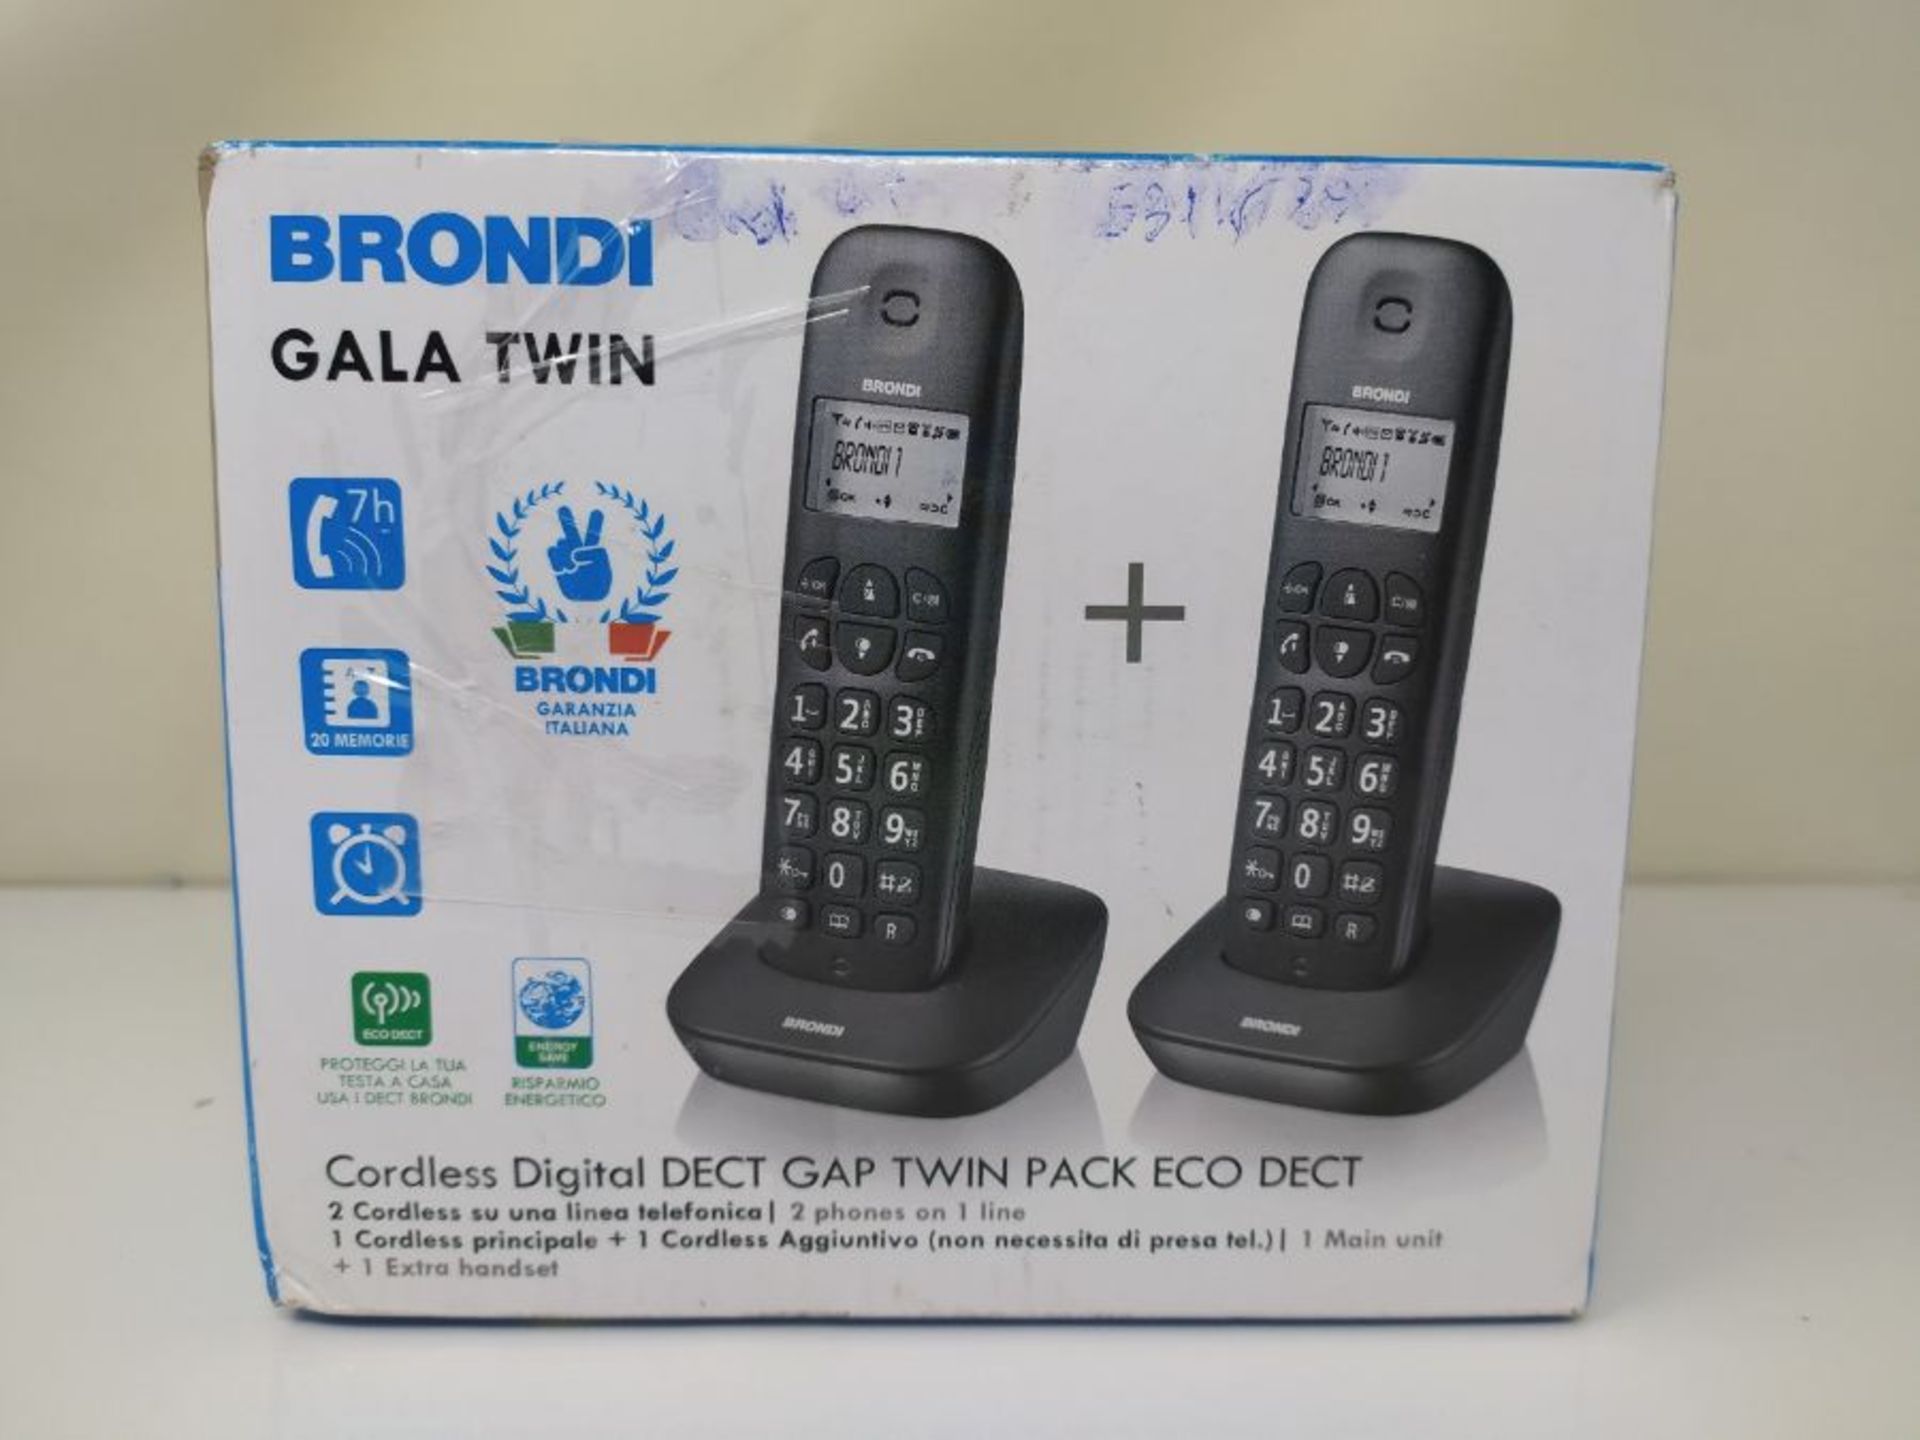 Brondi Gala Twin Telefono Cordless, Funzione ECO DECT, Nero - Image 2 of 3